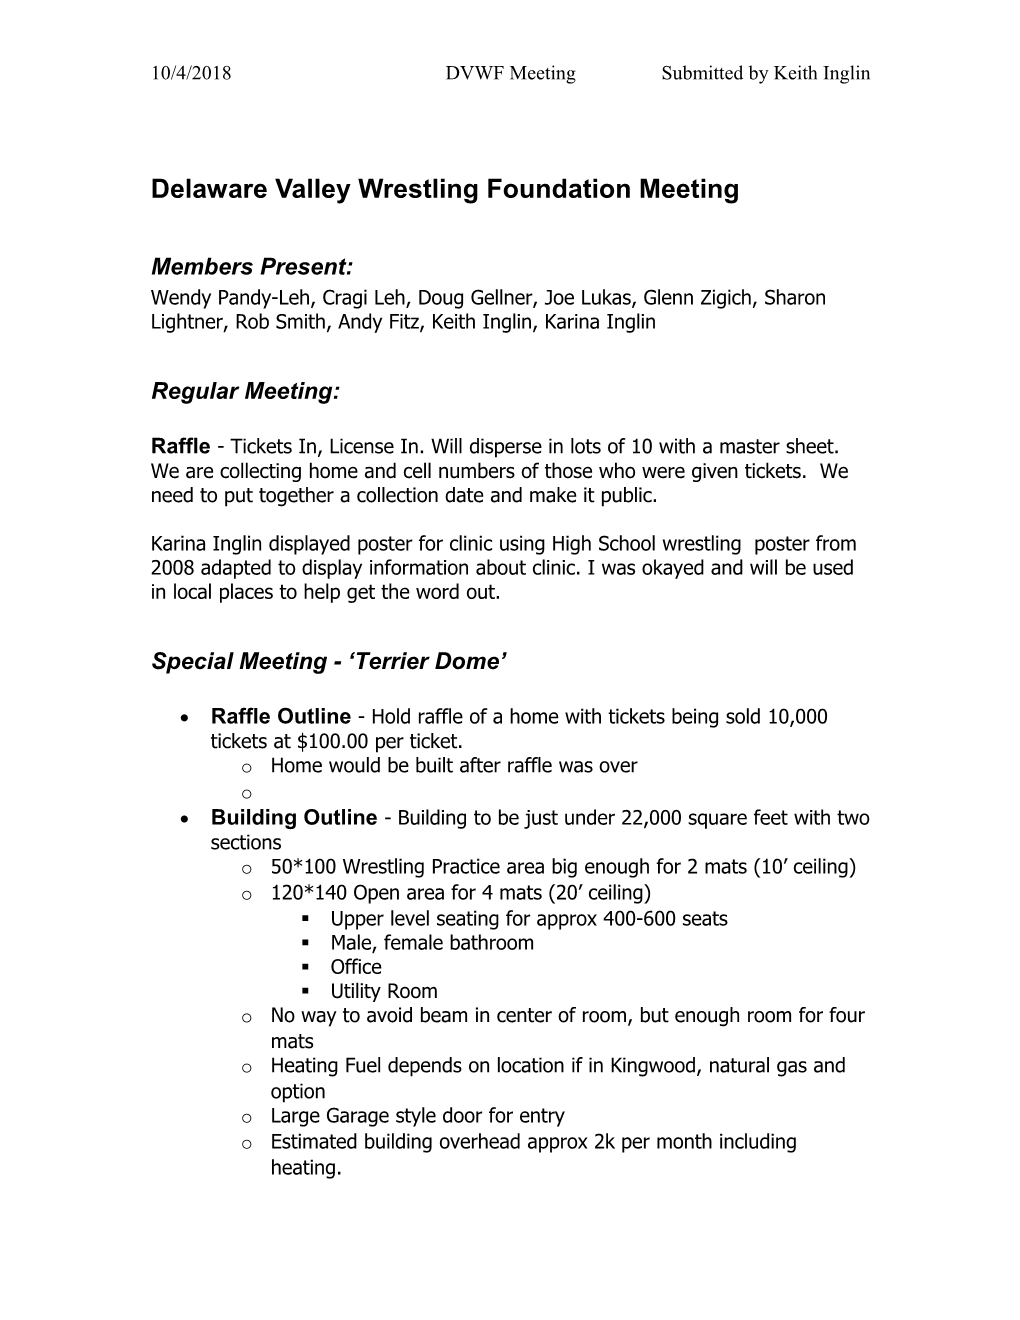 Delaware Valley Wrestling Foundation Meeting